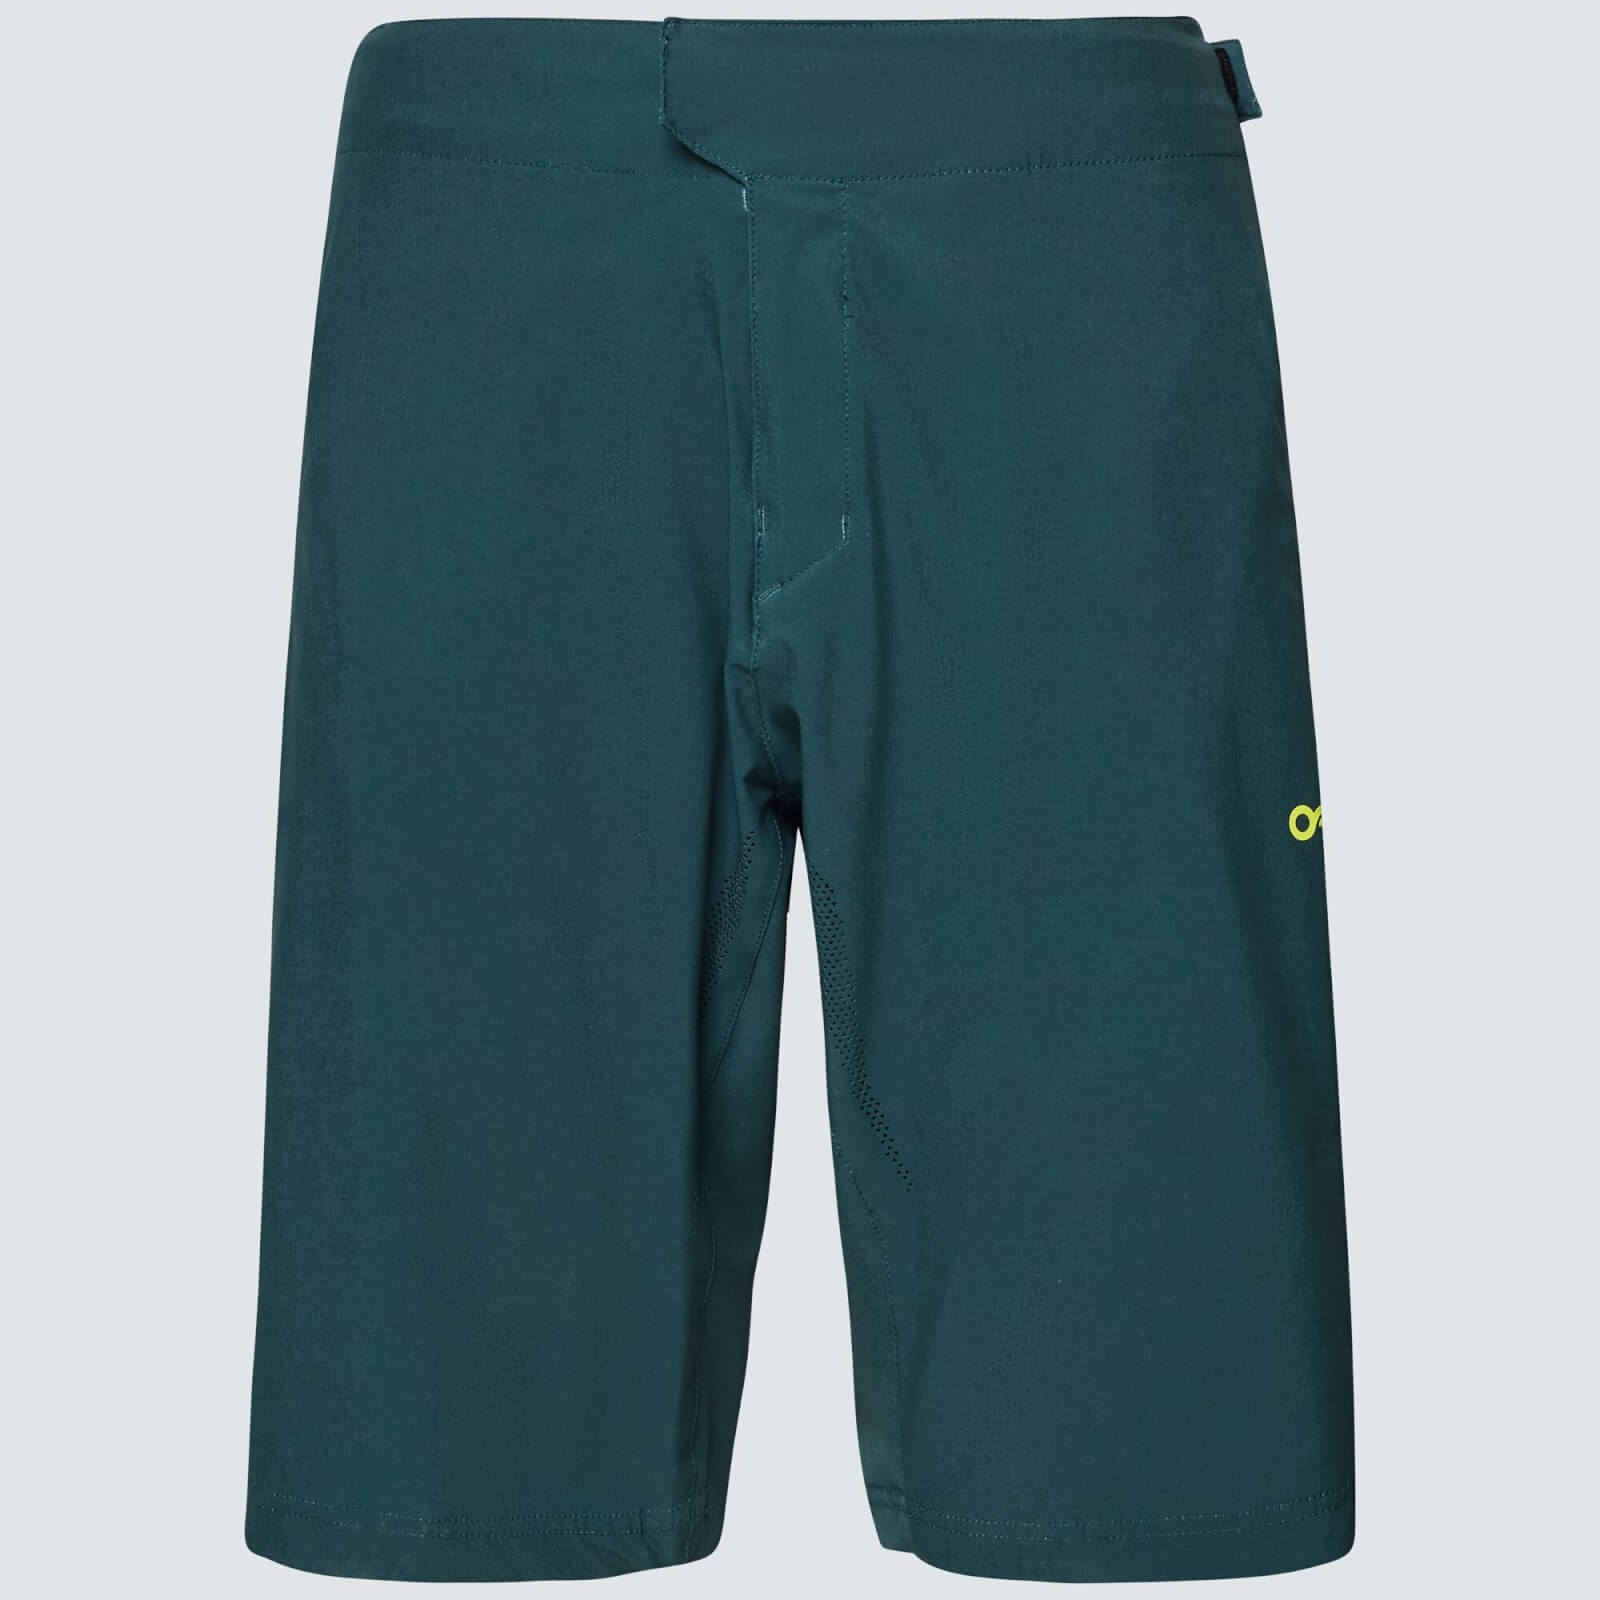 Oakley Reduct Berm Shorts - 30 - Hunter Green